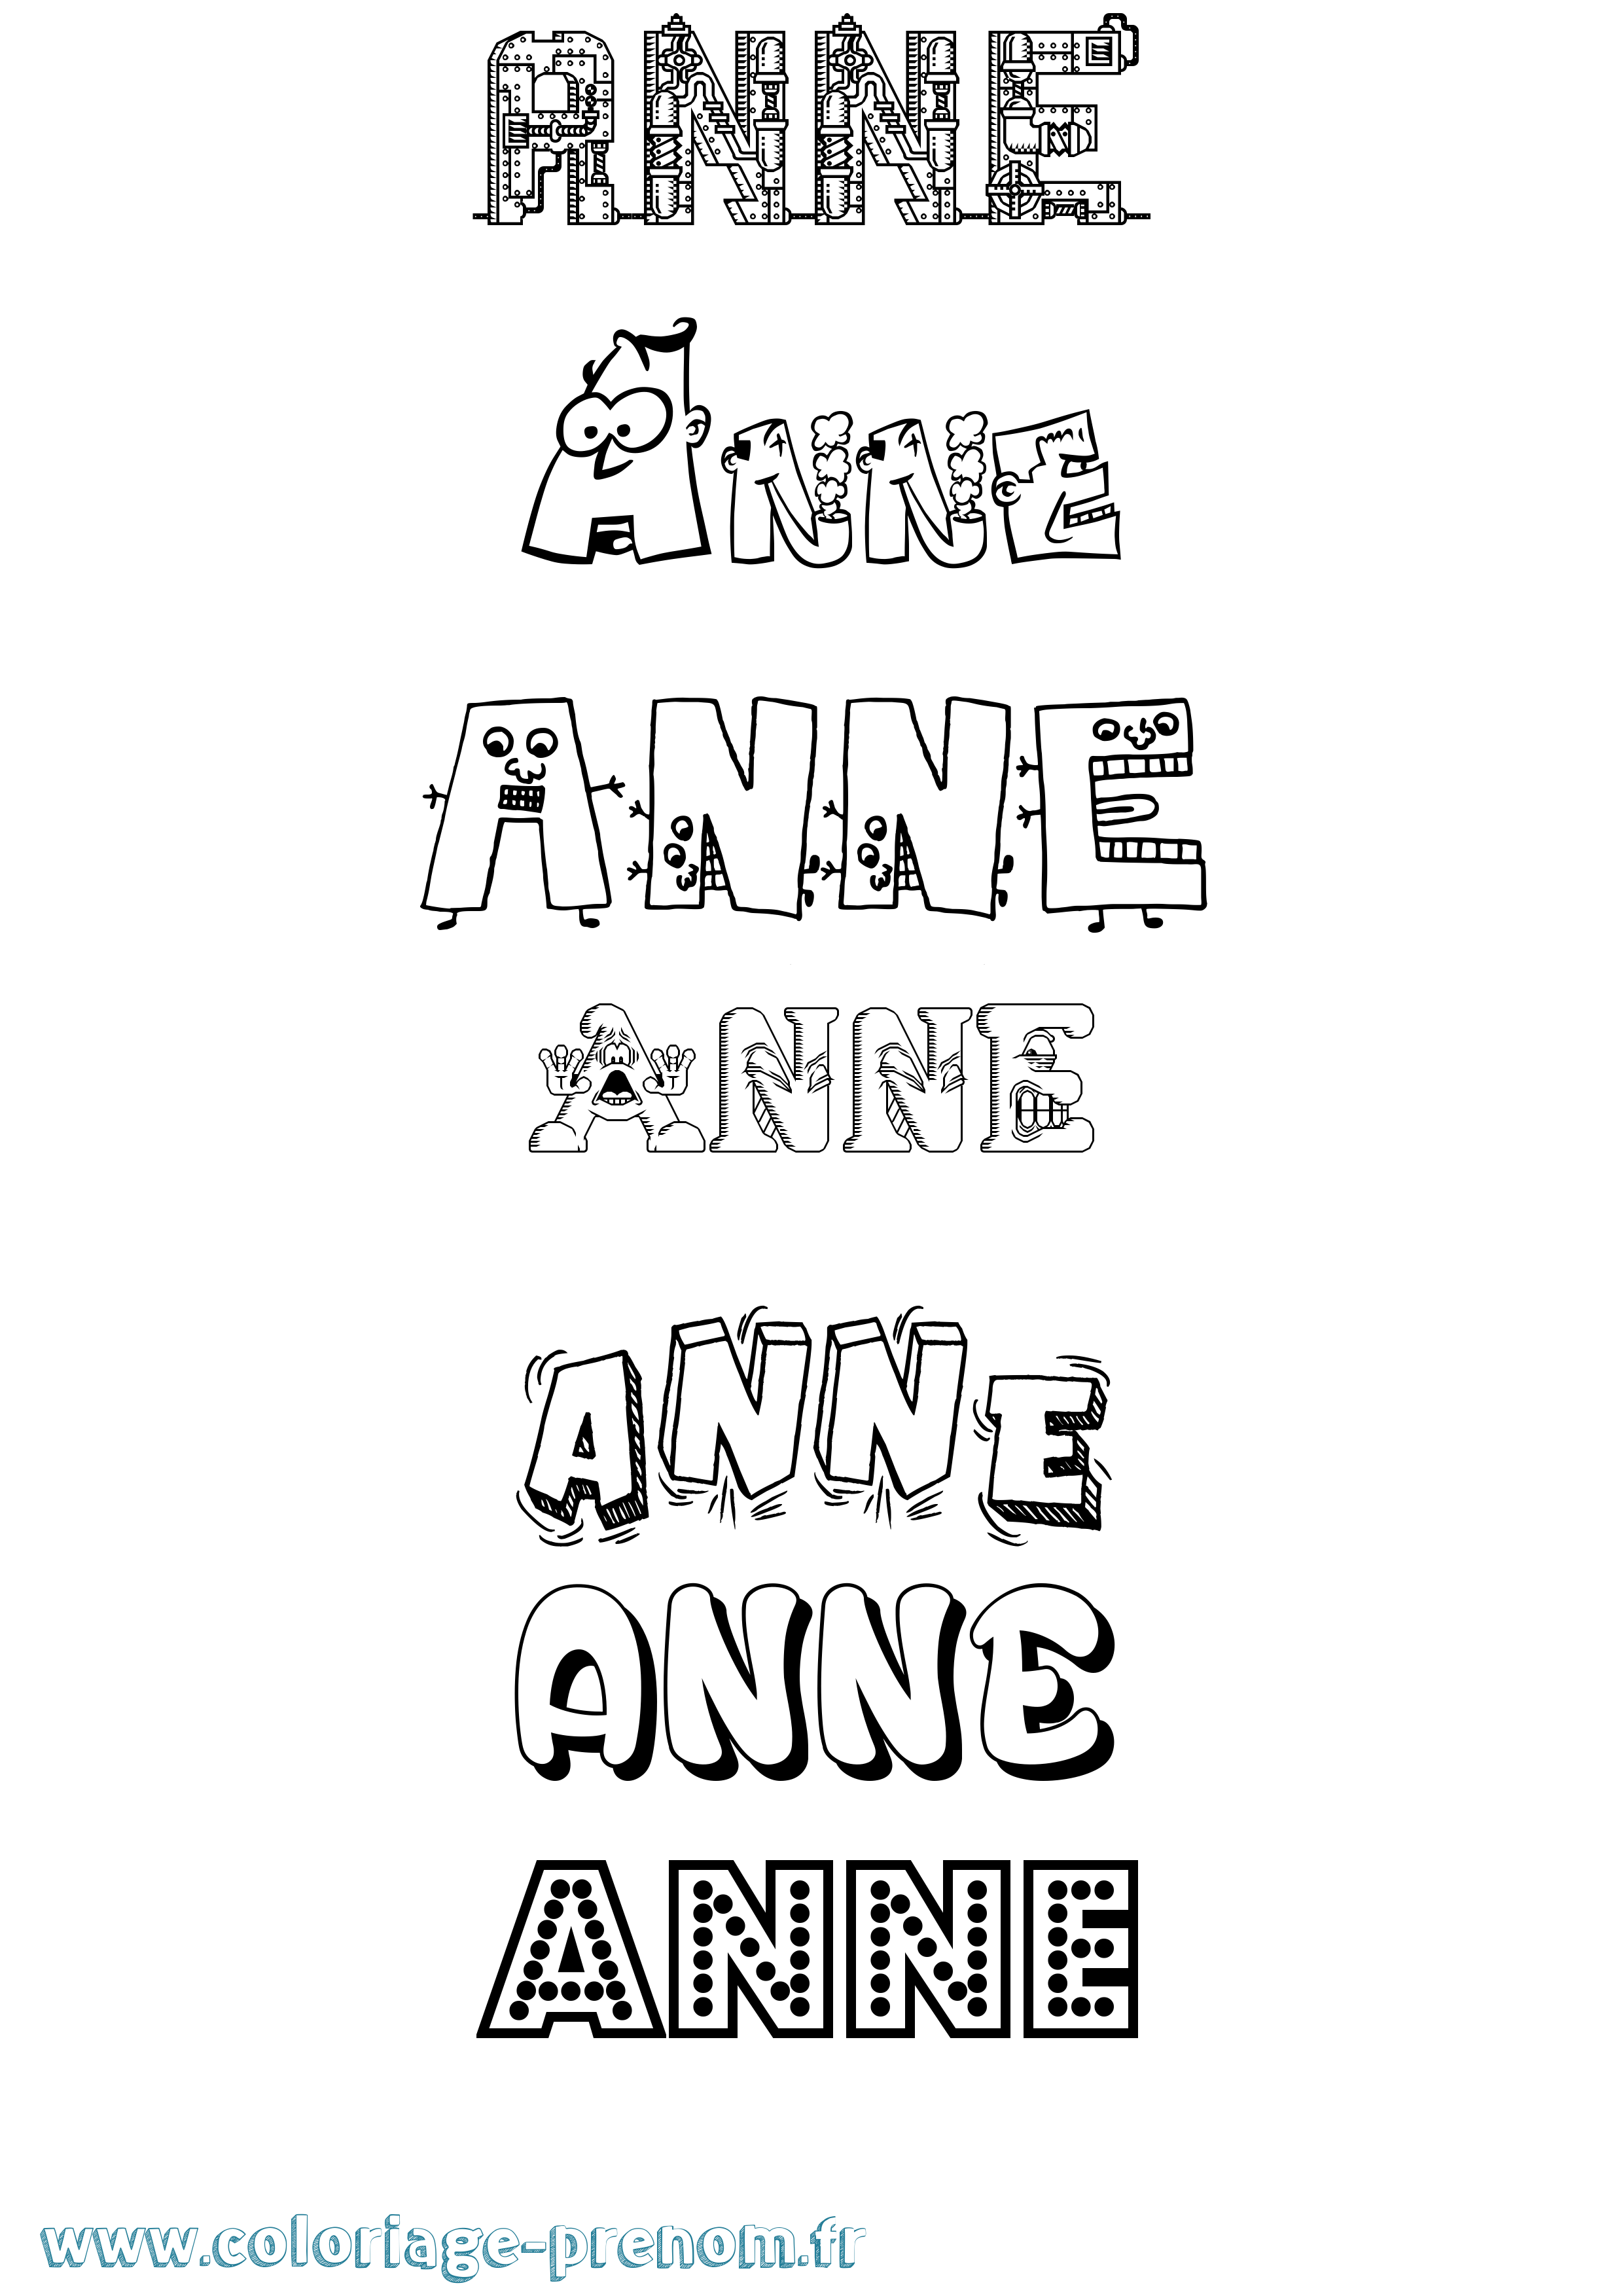 Coloriage prénom Anne Fun